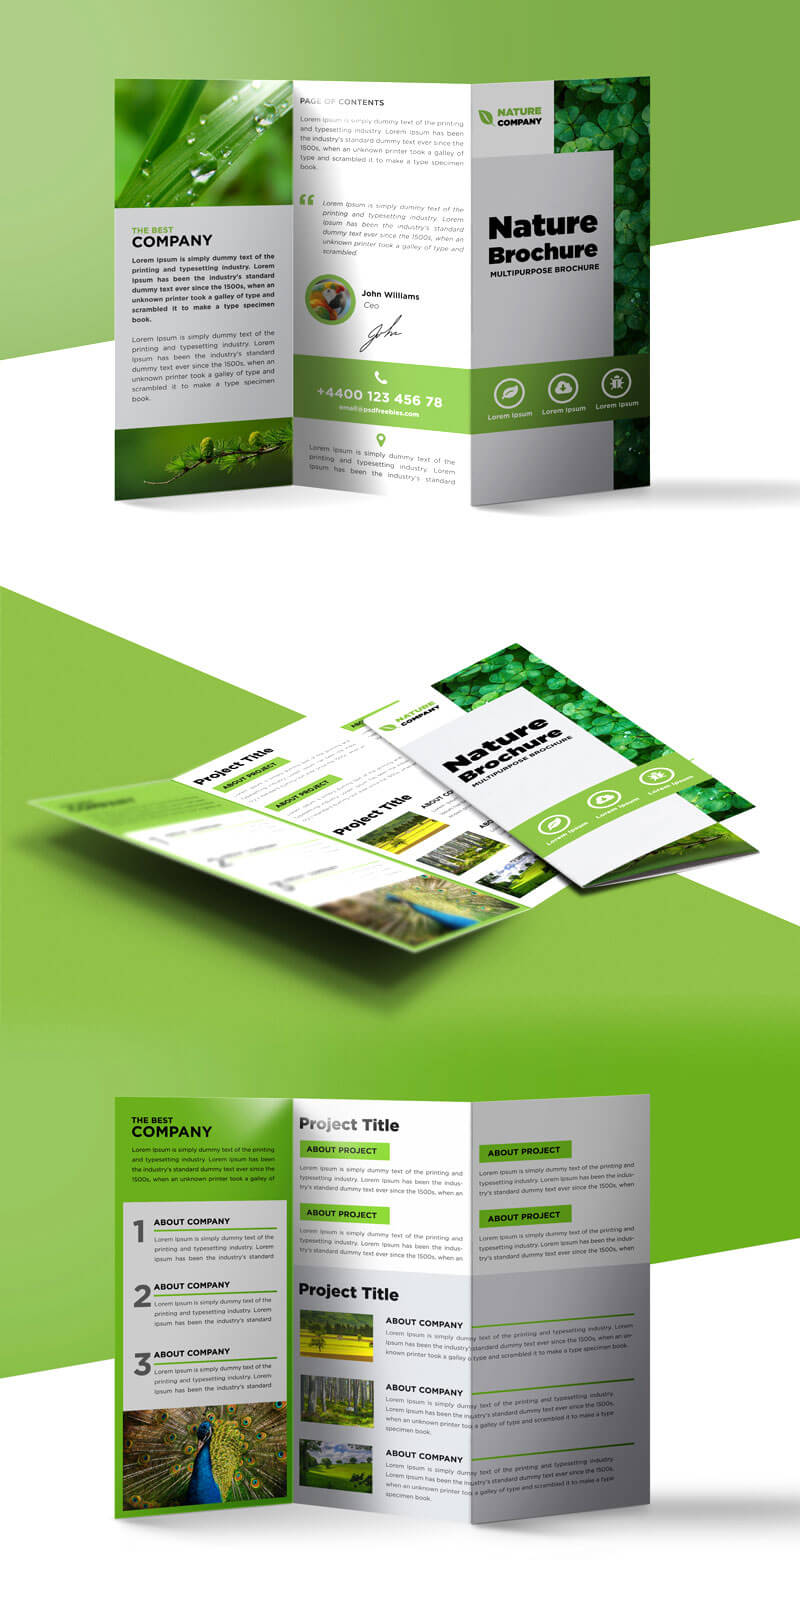 Nature Tri Fold Brochure Template Free Psd | Psdfreebies Throughout 3 Fold Brochure Template Free